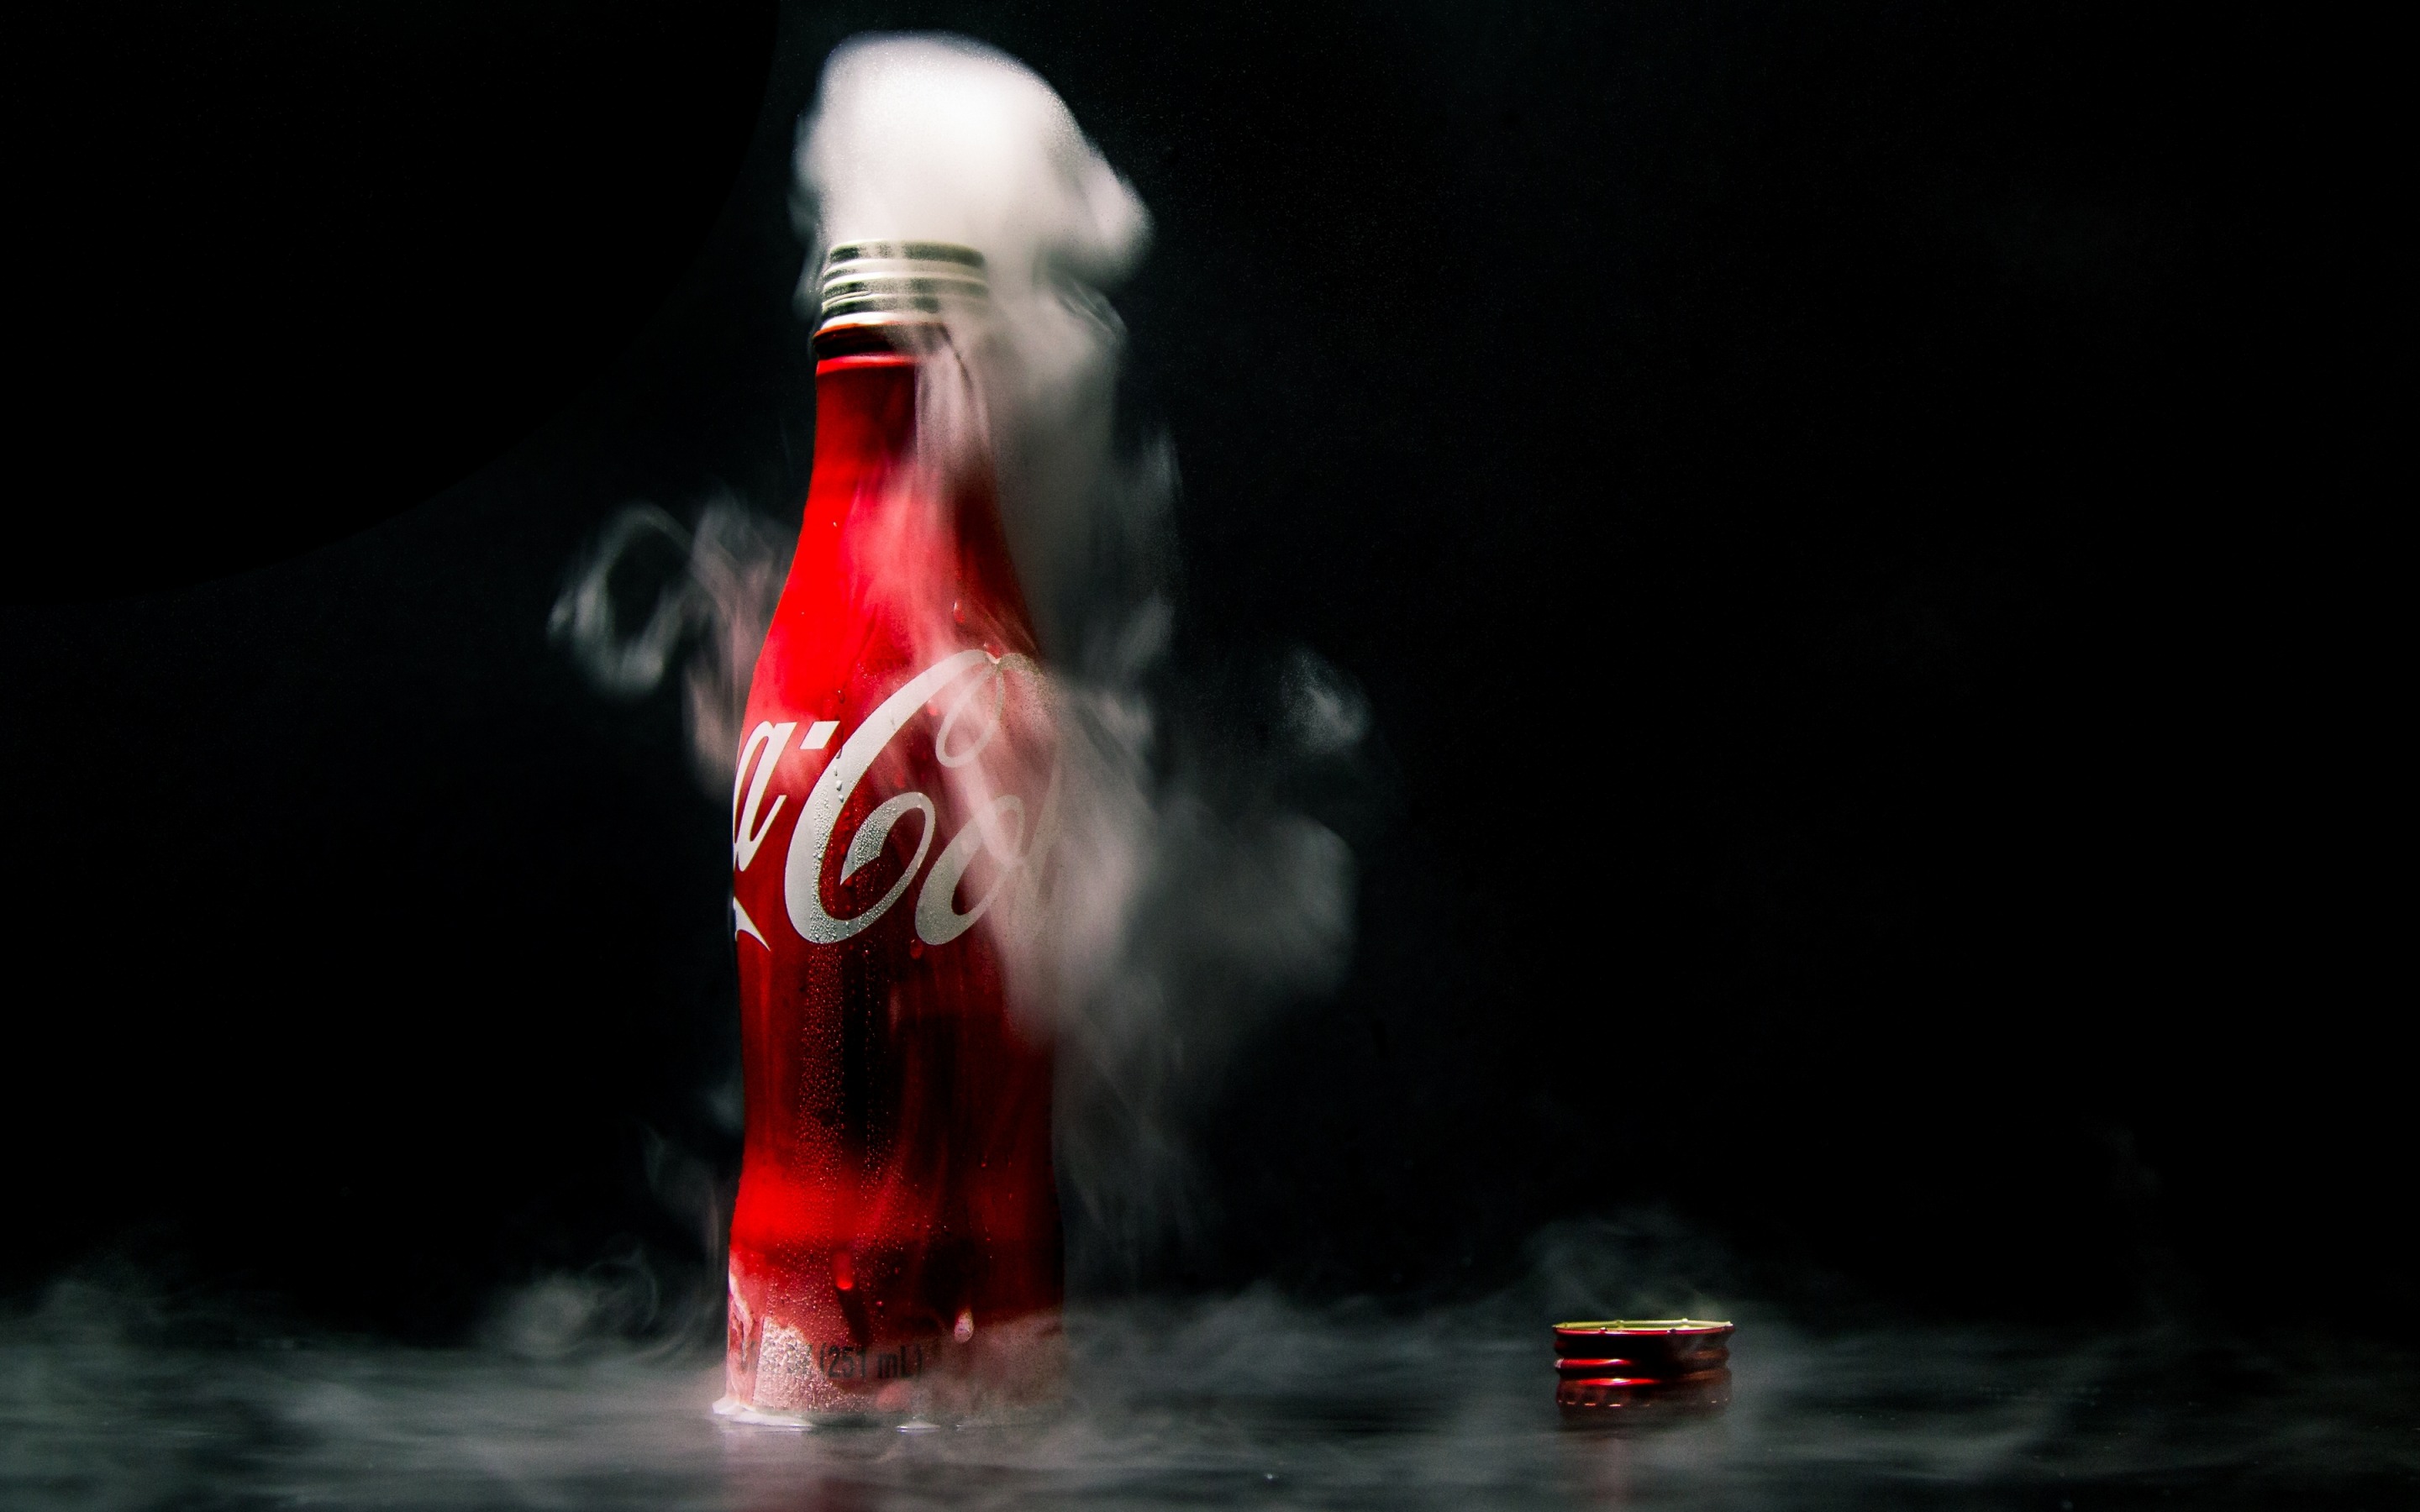 cola wallpaper,drink,cola,coca cola,soft drink,carbonated soft drinks